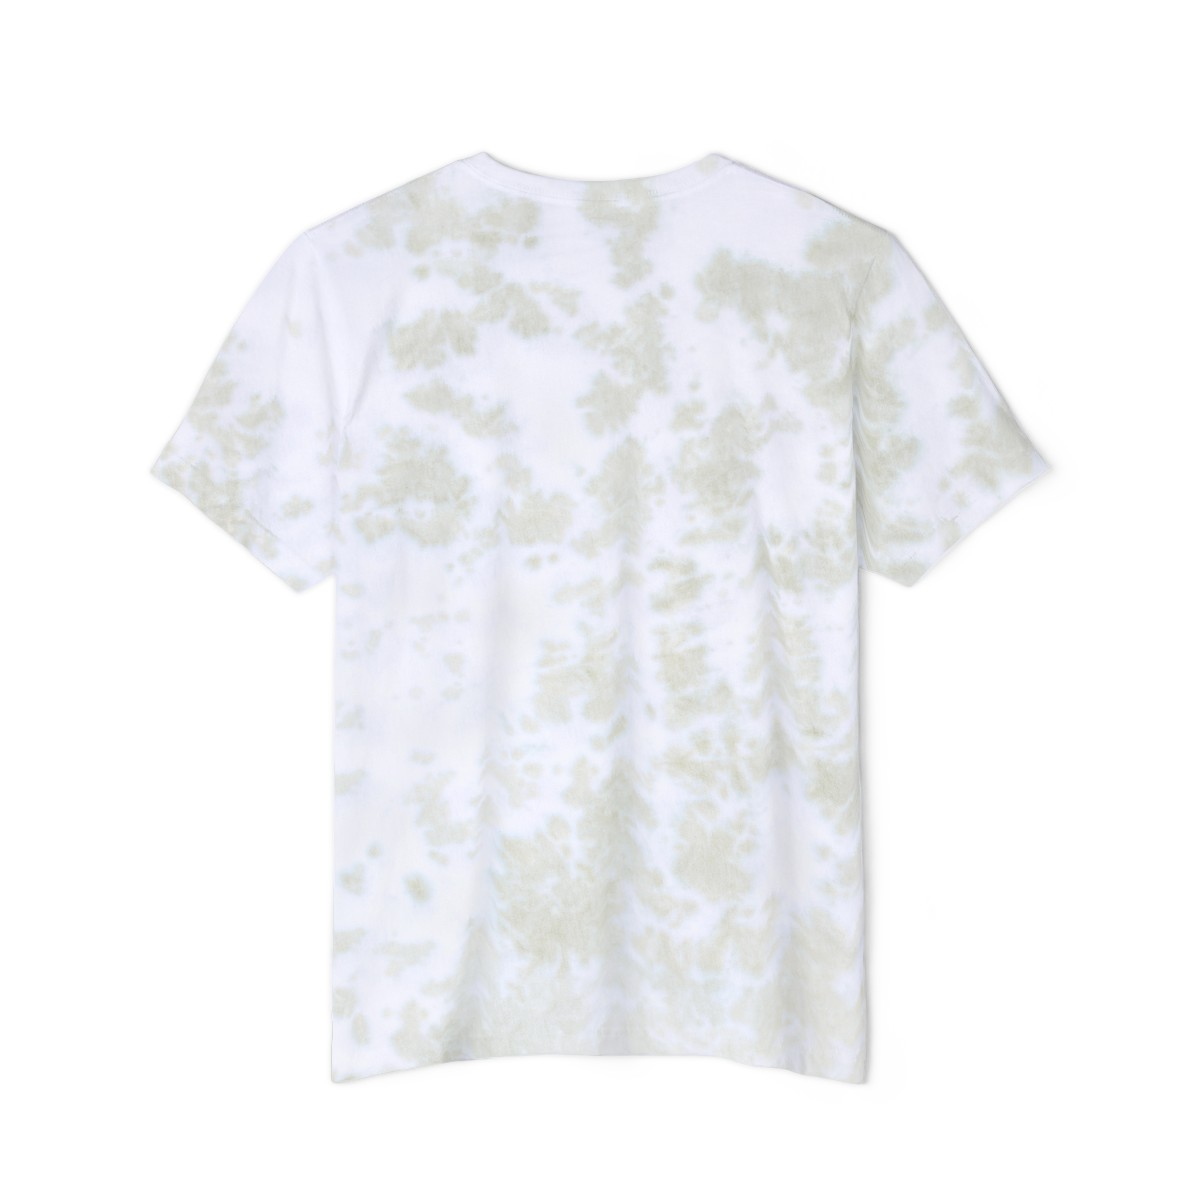 Unisex FWD Fashion Tie-Dyed T-Shirt product thumbnail image